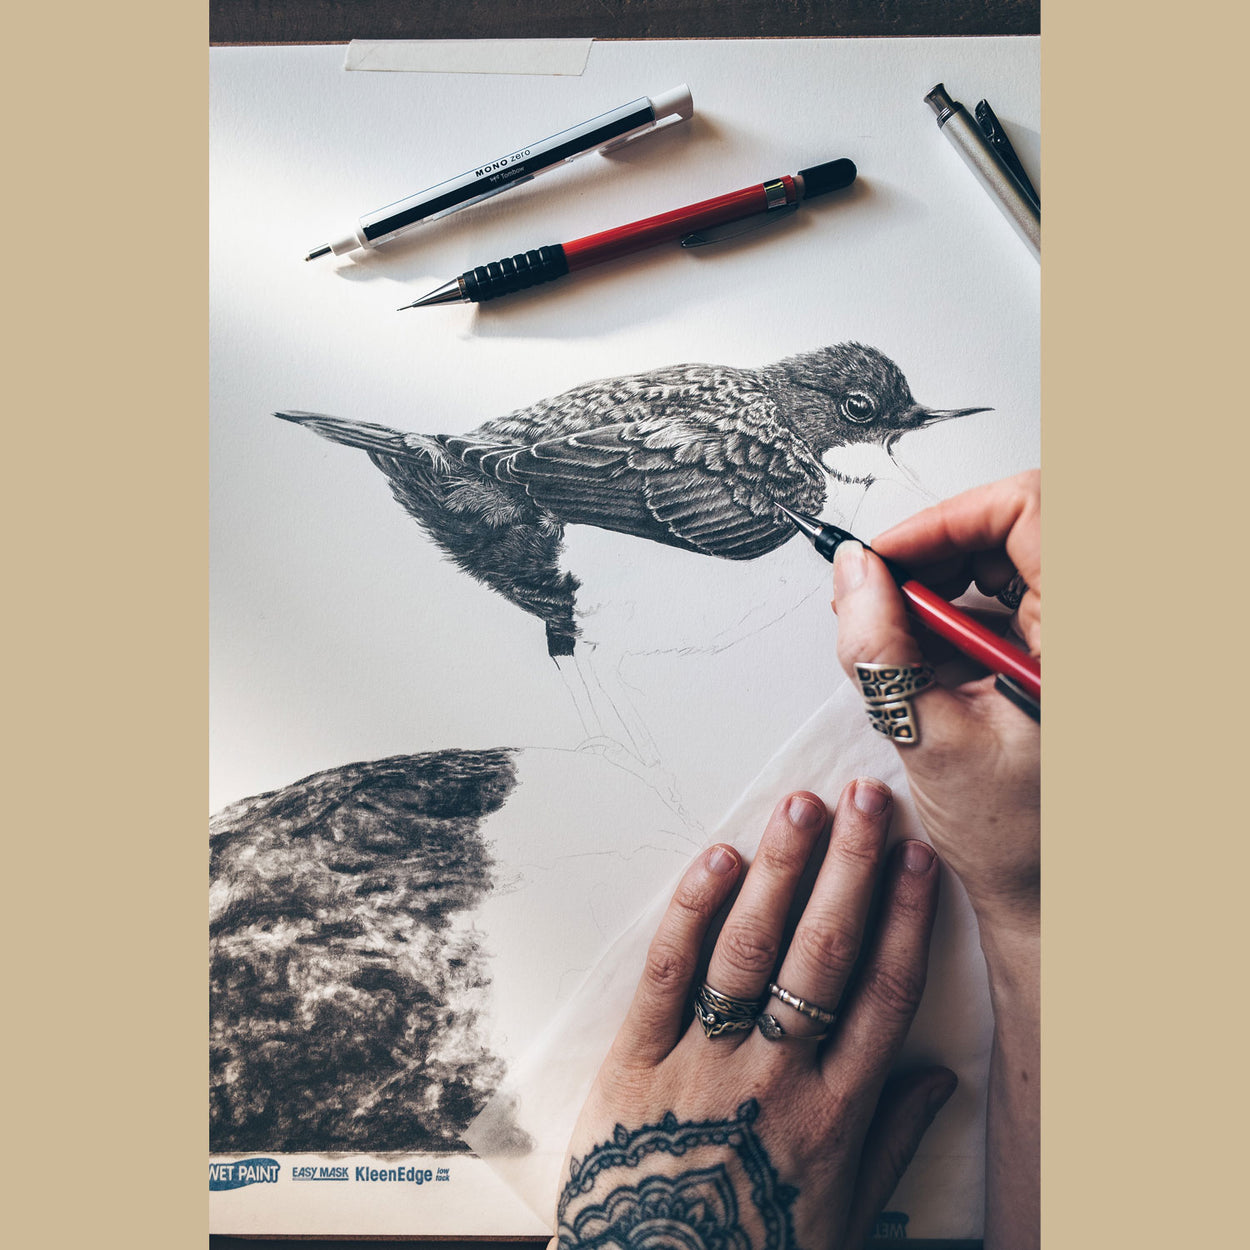 Dipper Bird Pencil Drawing in Progress - The Thriving Wild